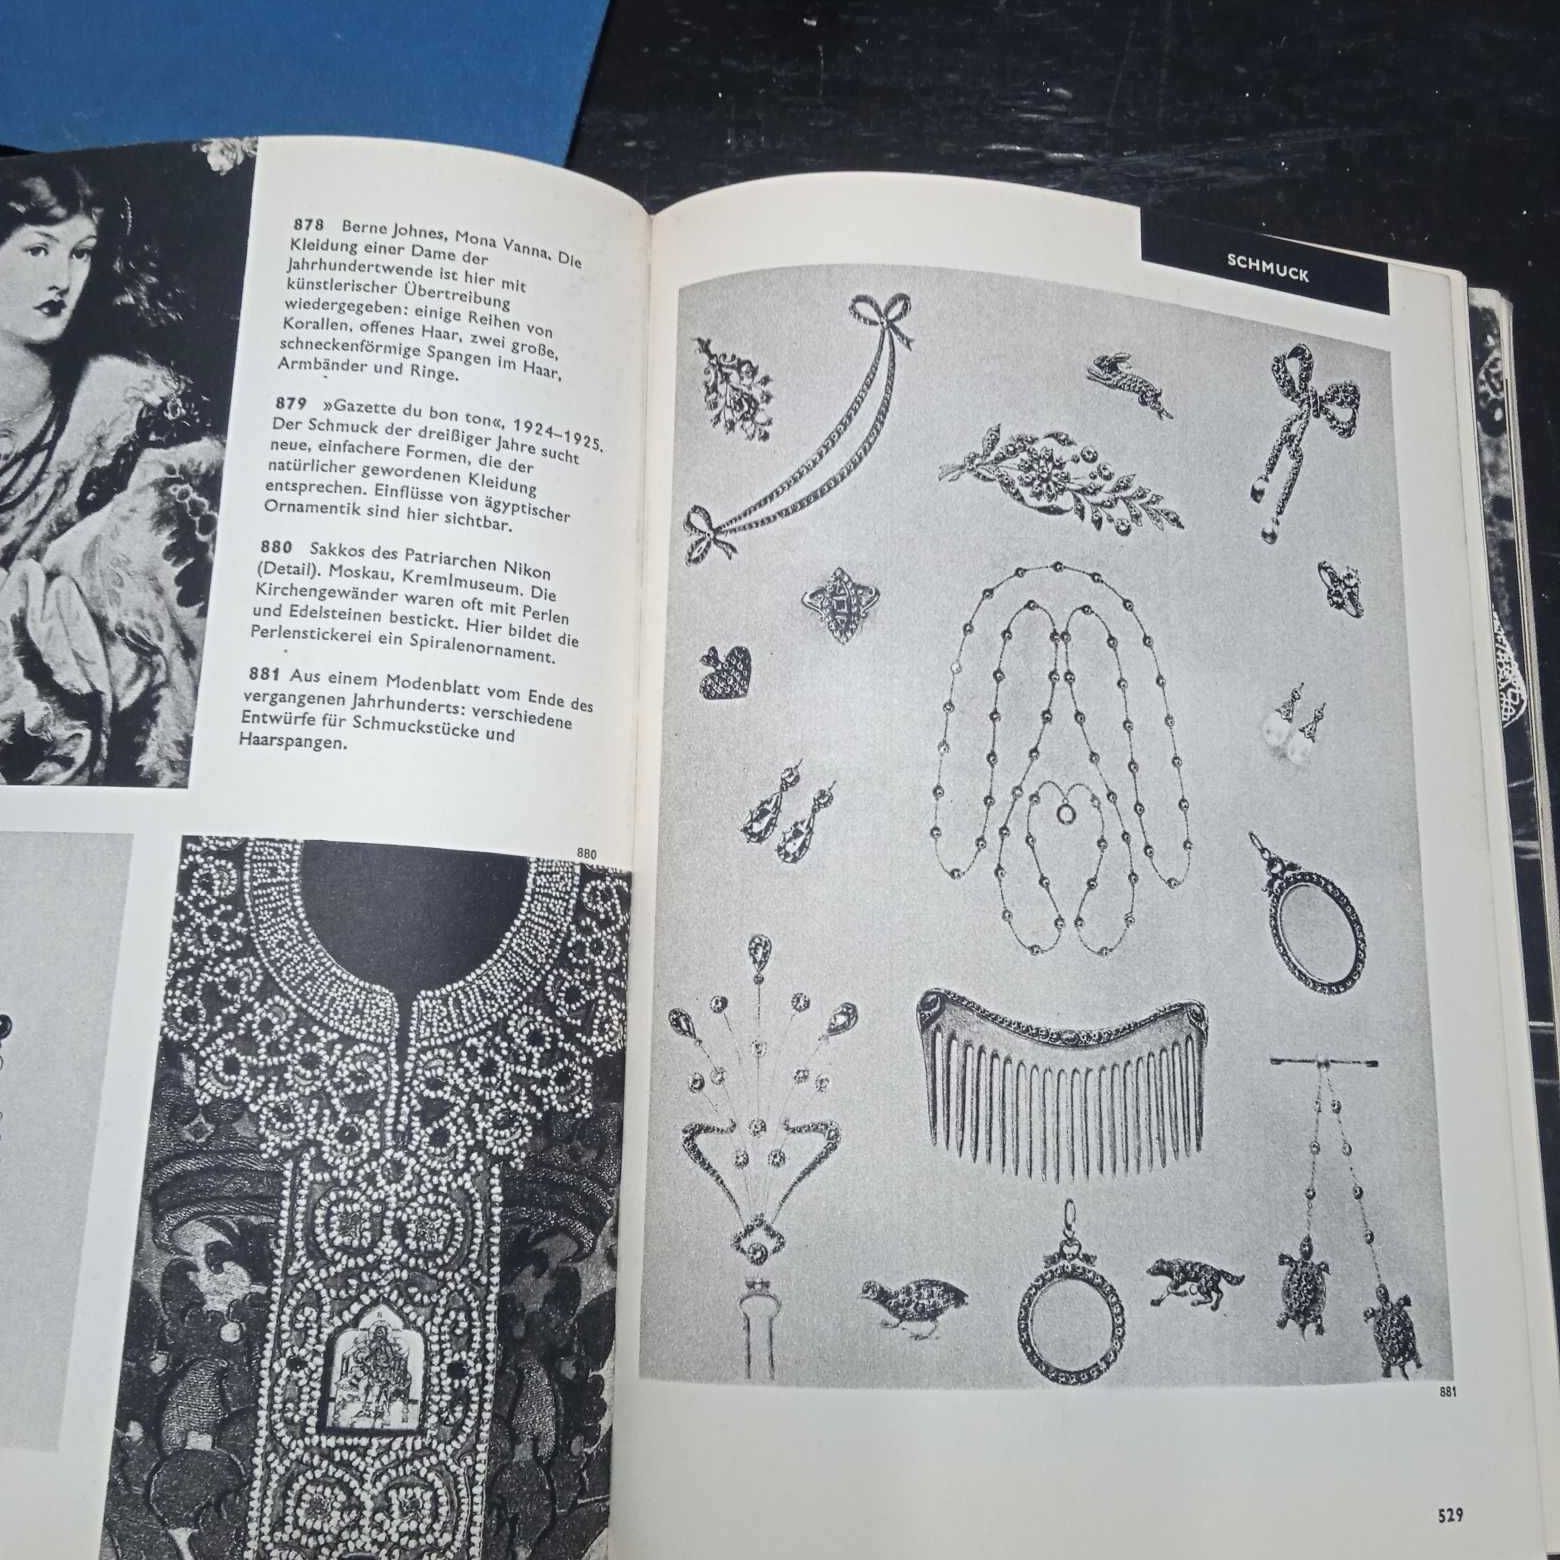 Старинна книга картинен лексикон на модата  Artia Verlag 1966 г.